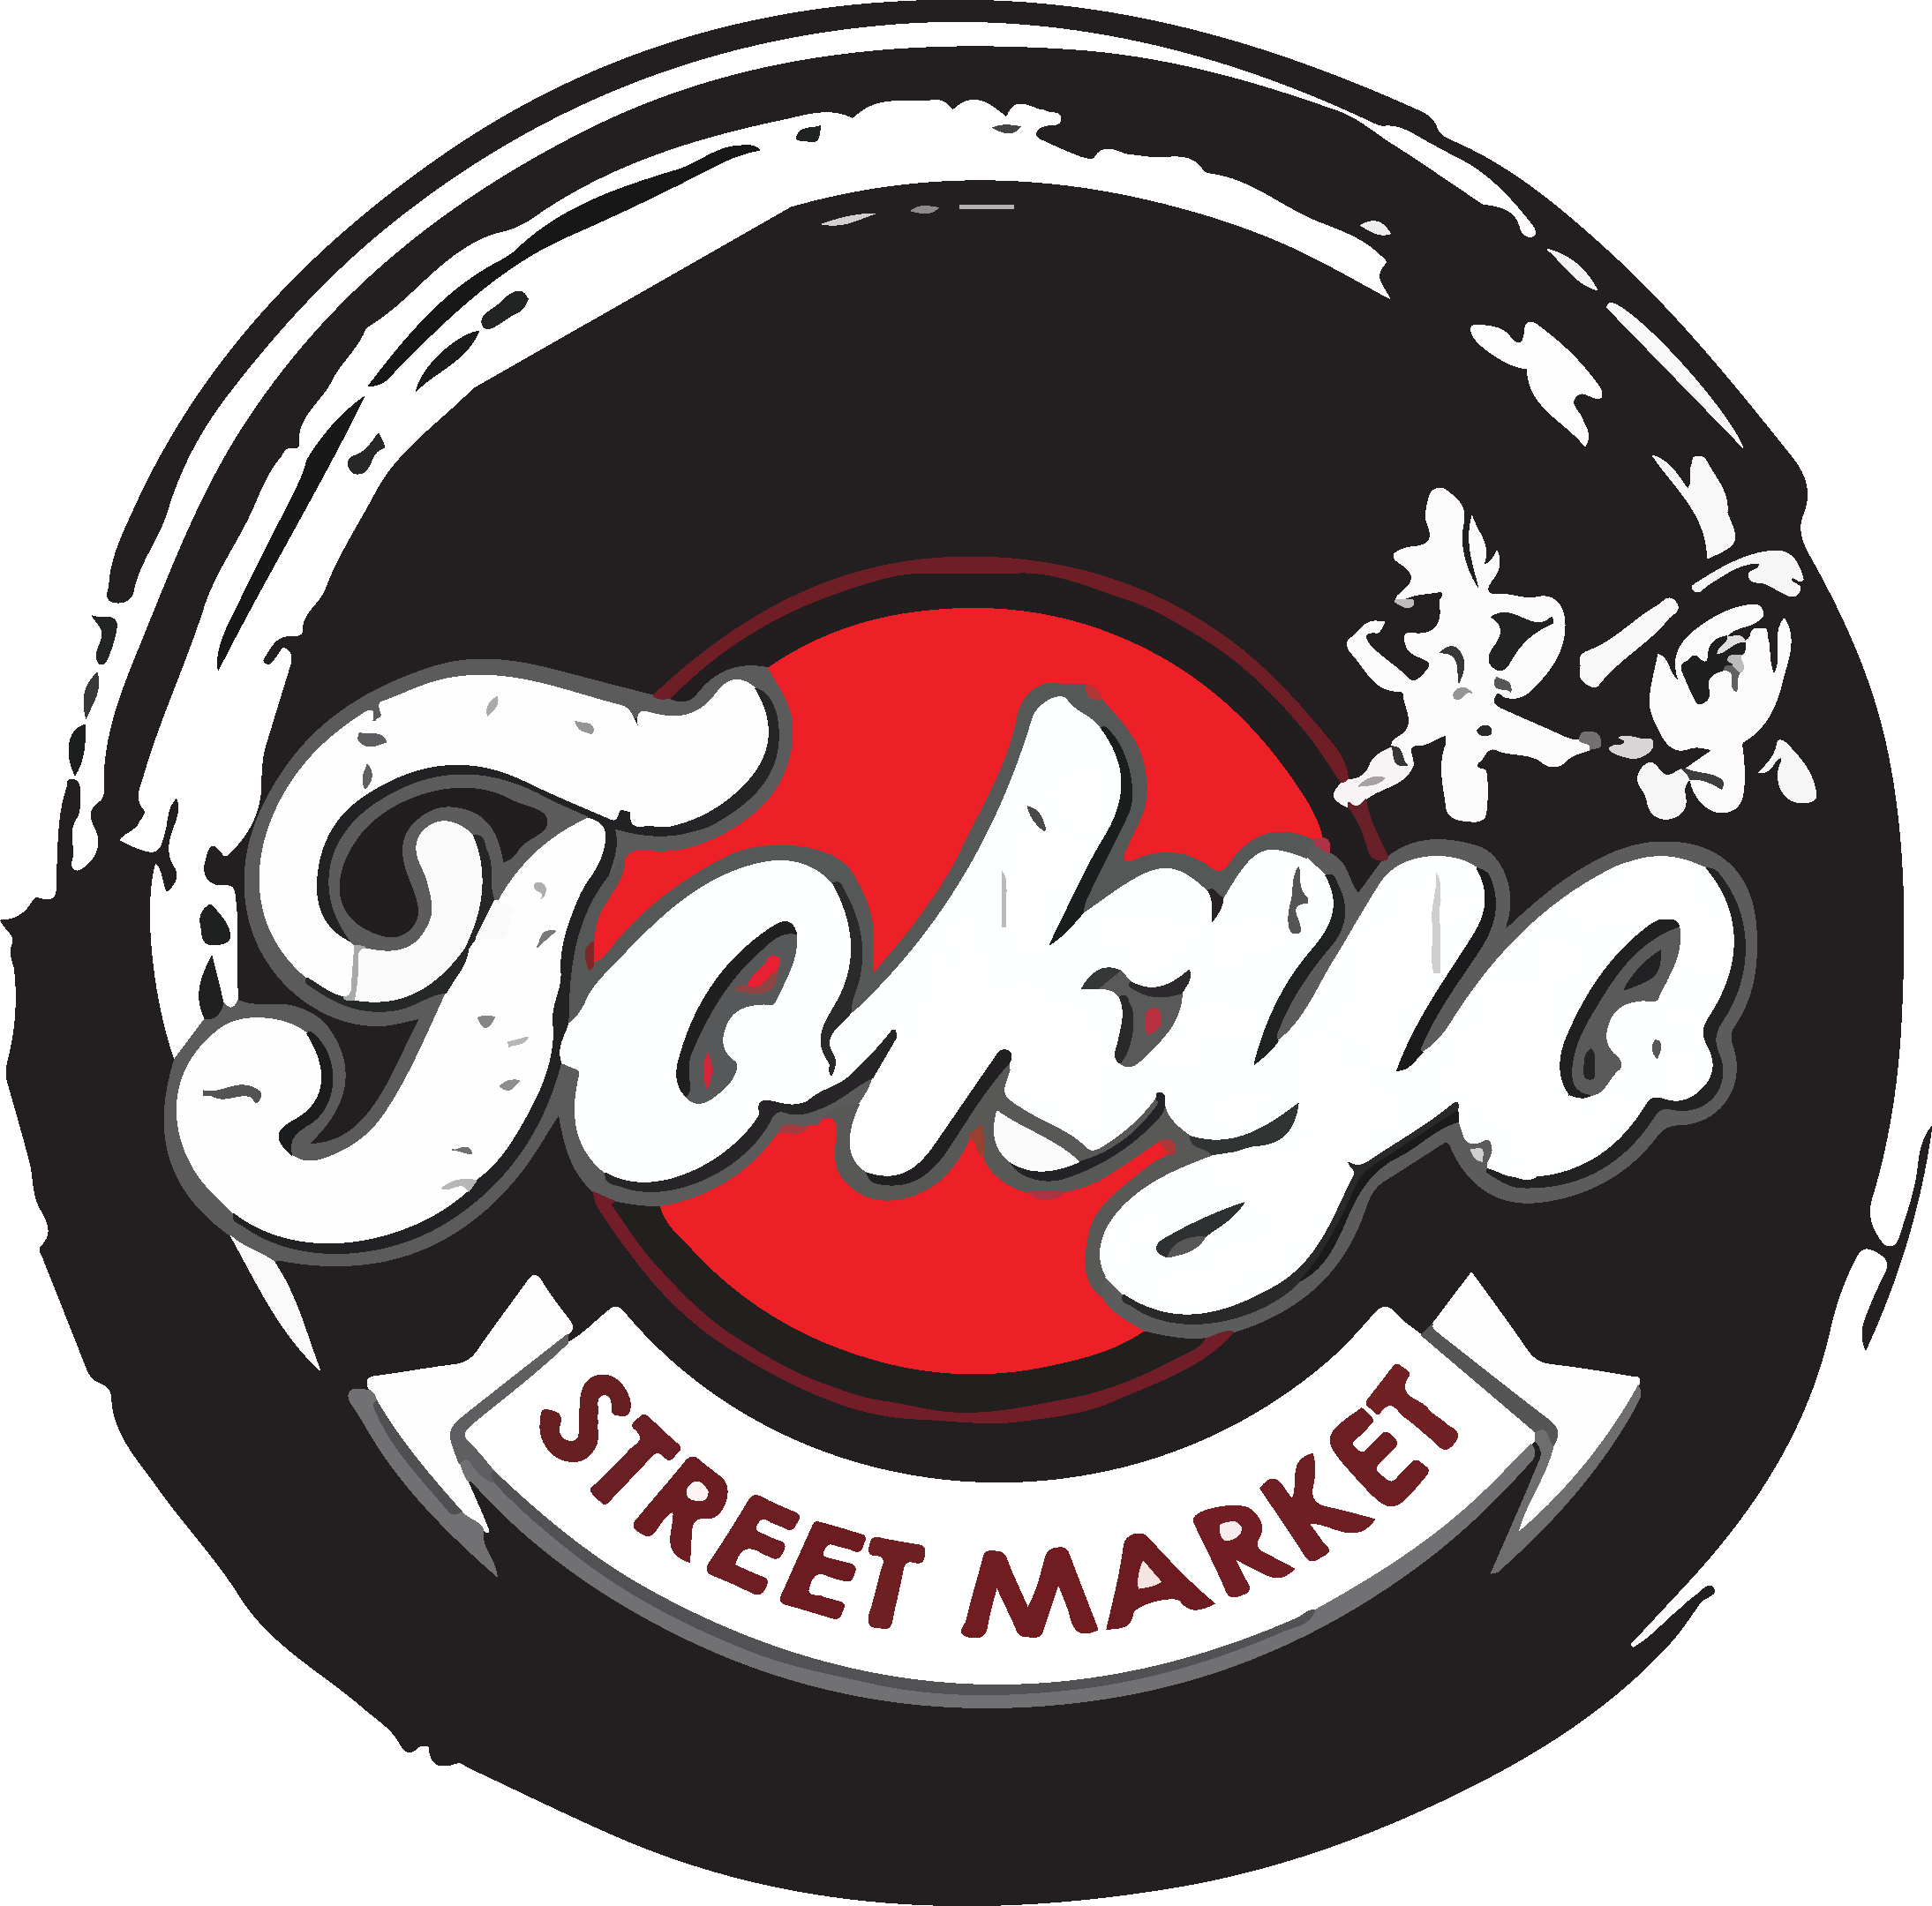 Tokyo logo